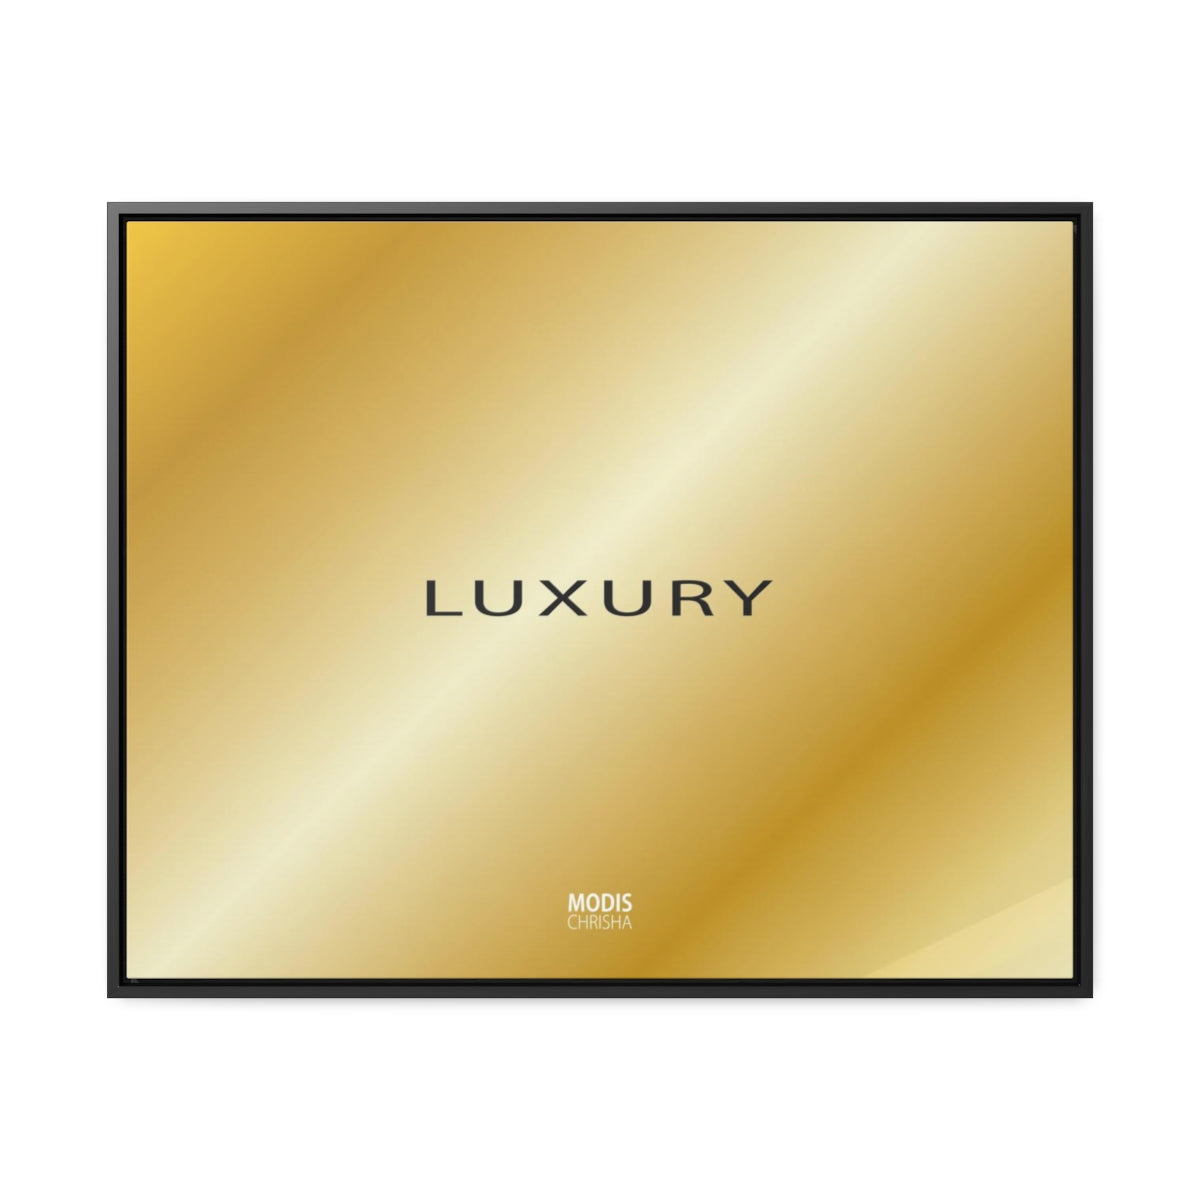 Canvas Gallery Wraps Frame Horizontal 30“ x 24“ - Design Luxury